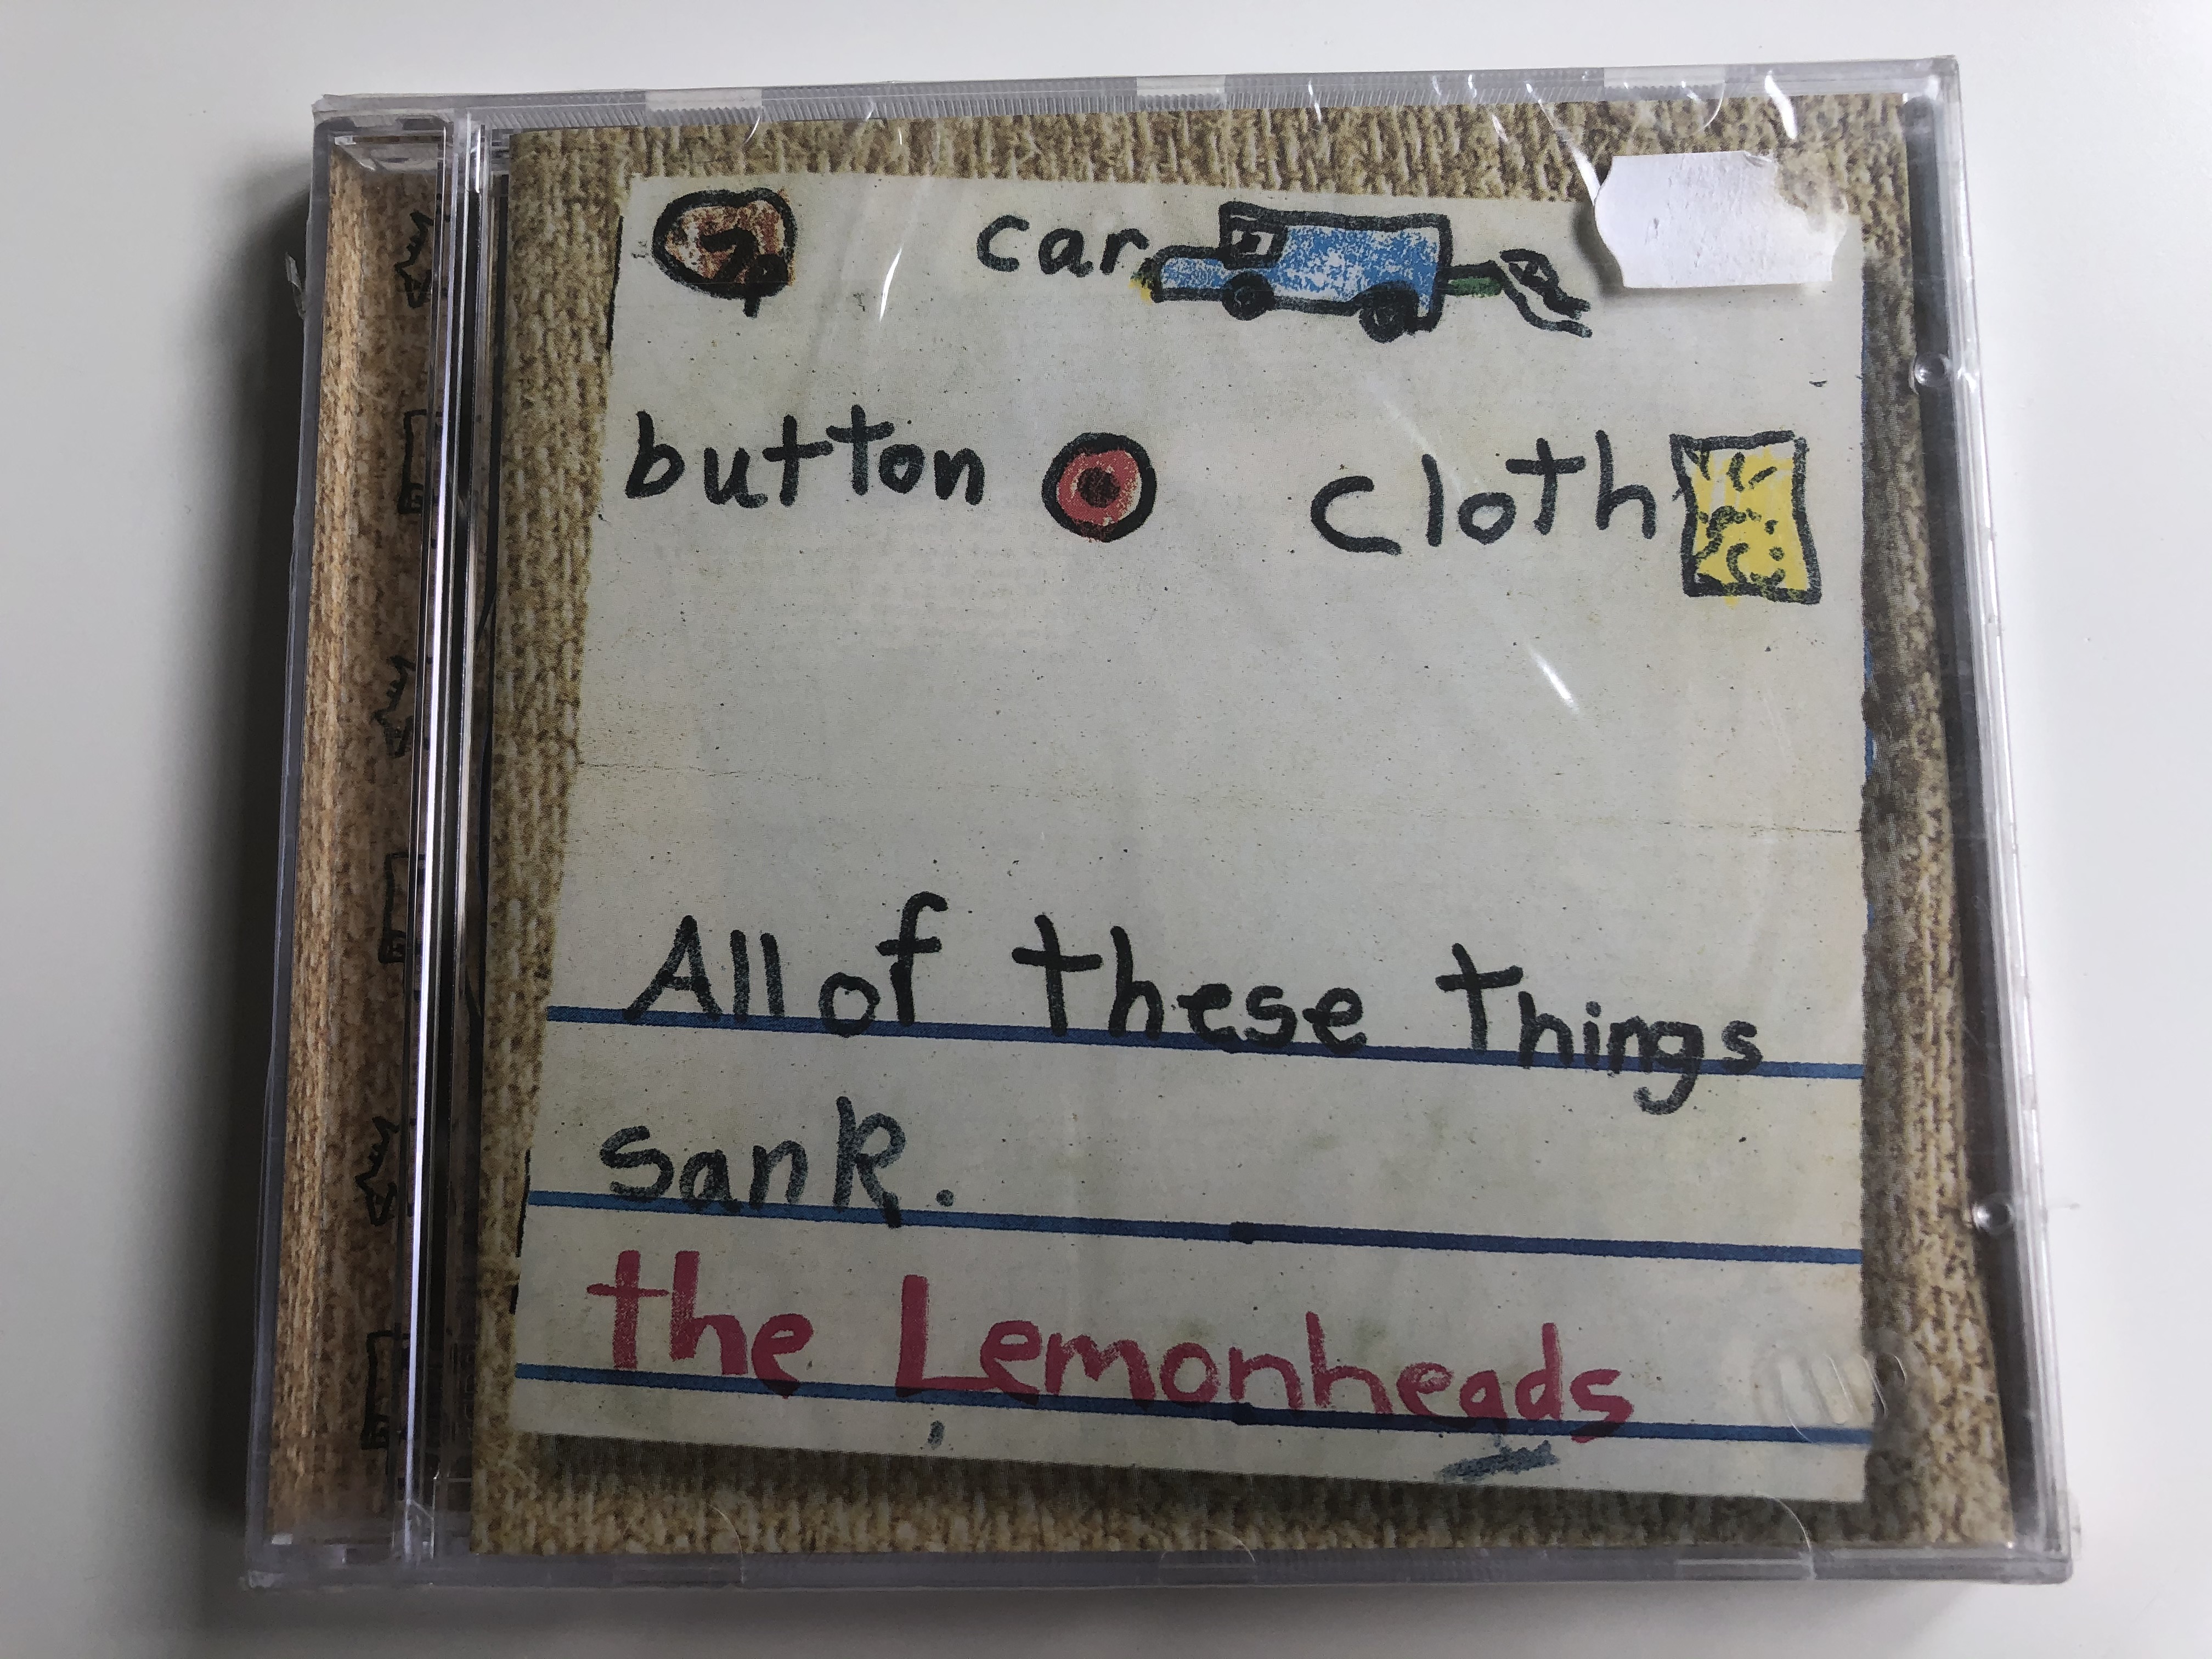 car-button-cloth-all-of-these-things-sanr.-the-lemonheads-atlantic-audio-cd-1996-7567-92726-2-1-.jpg